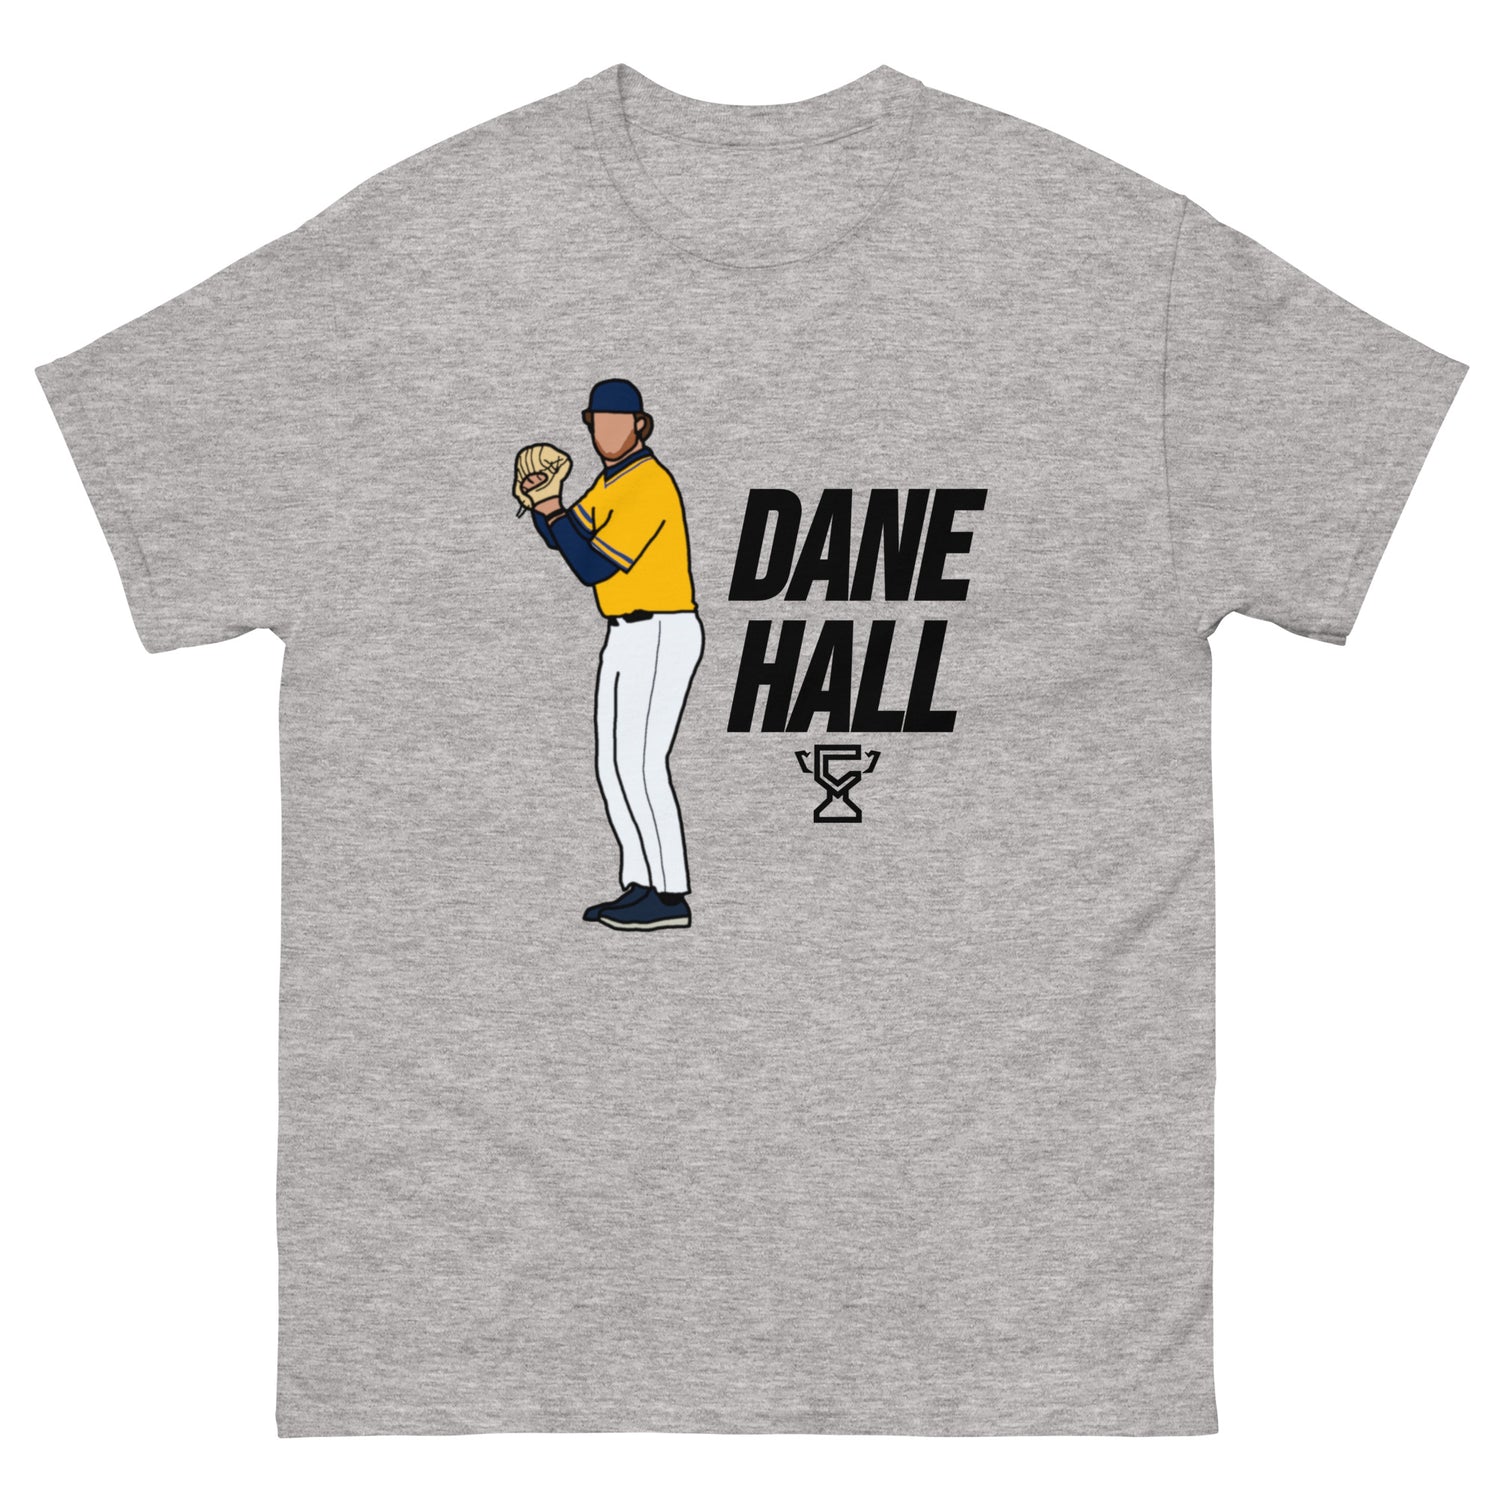 Gray t-shirt featuring art of Dane Hall.